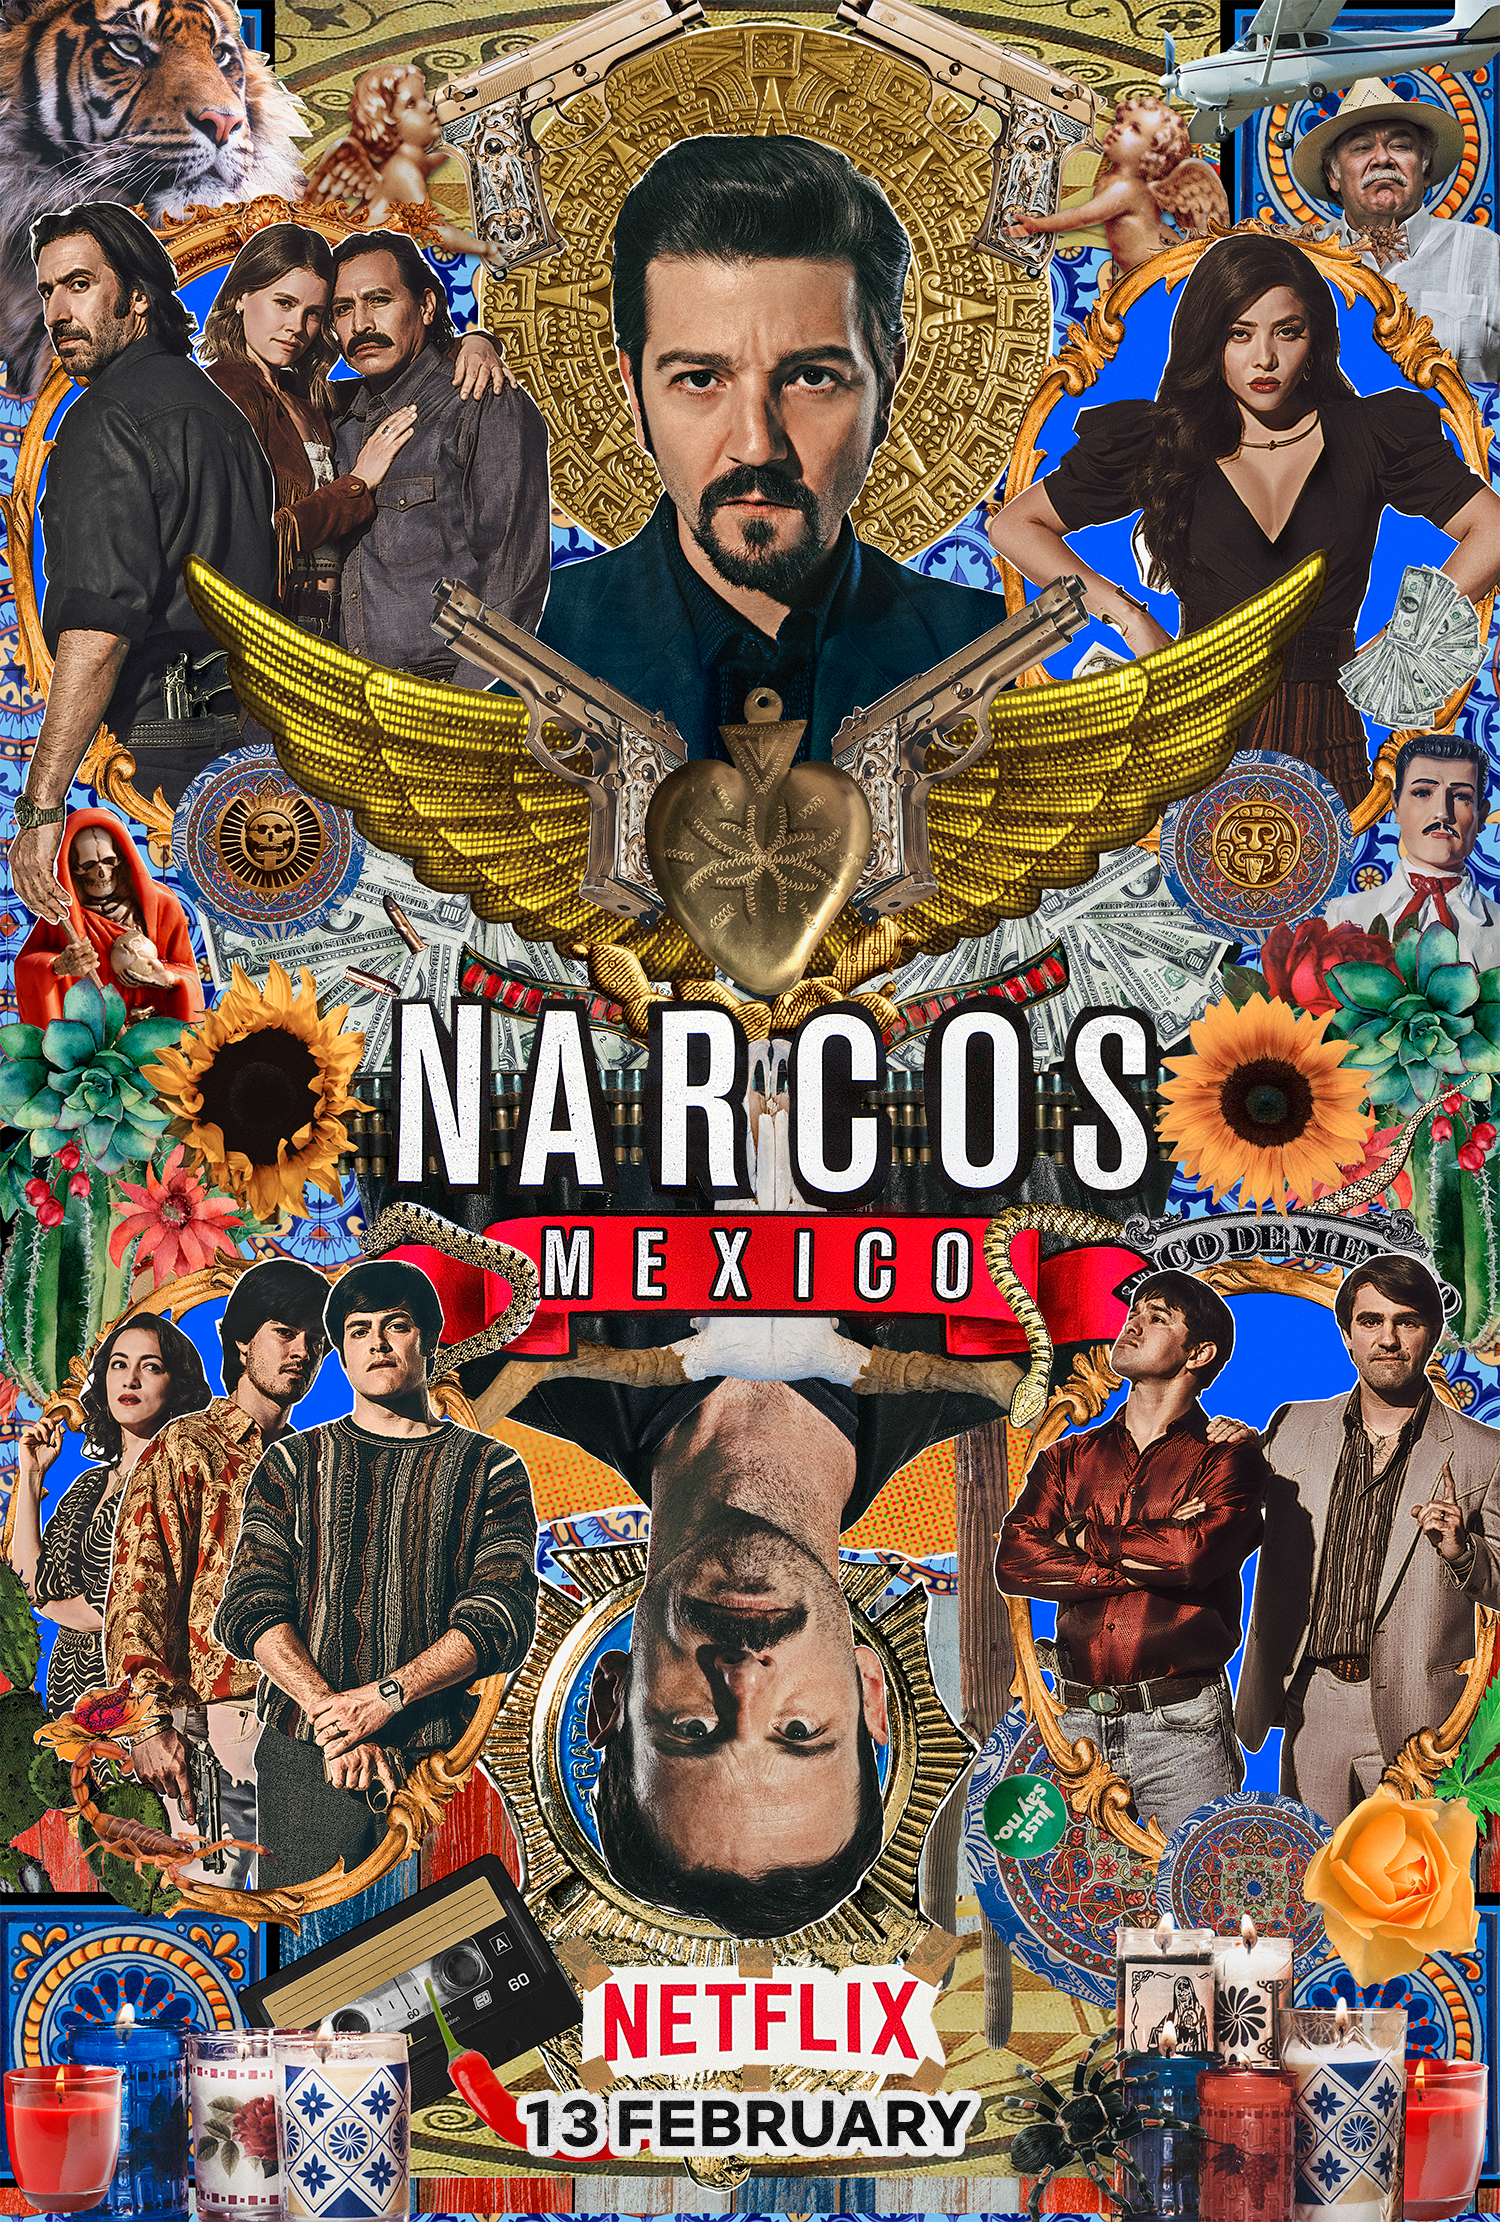 Stiahni si Seriál Narcos: Mexiko / Narcos: Mexico S01E06 (CZ)[WebRip][1080p] = CSFD 86%